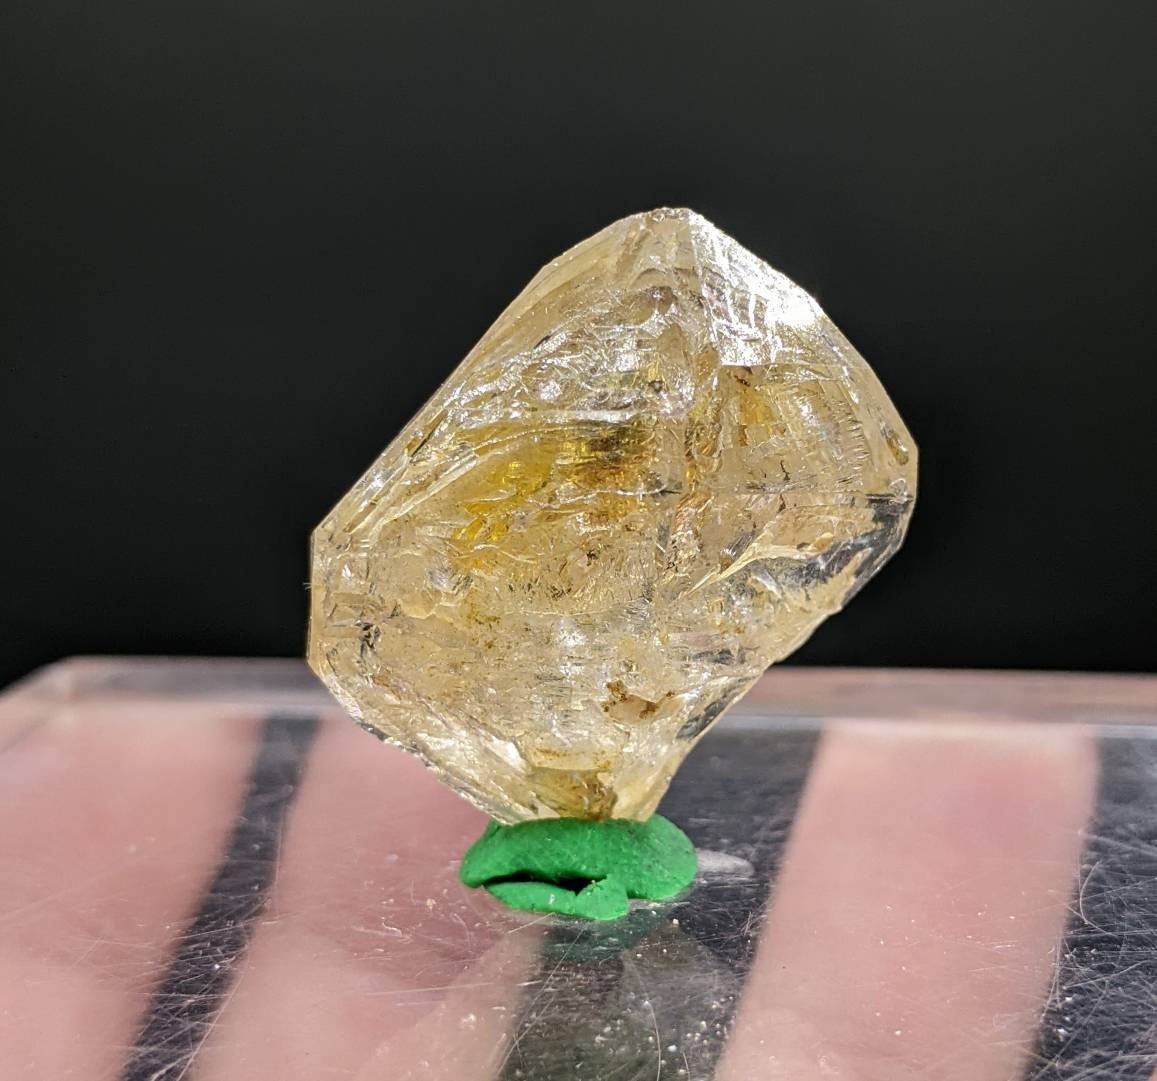 ARSAA GEMS AND MINERALSAesthetic fine quality beautiful UV reactive petroleum quartz crystal from Balochistan Pakistan, weight 8.4 grams - Premium  from ARSAA GEMS AND MINERALS - Just $100.00! Shop now at ARSAA GEMS AND MINERALS